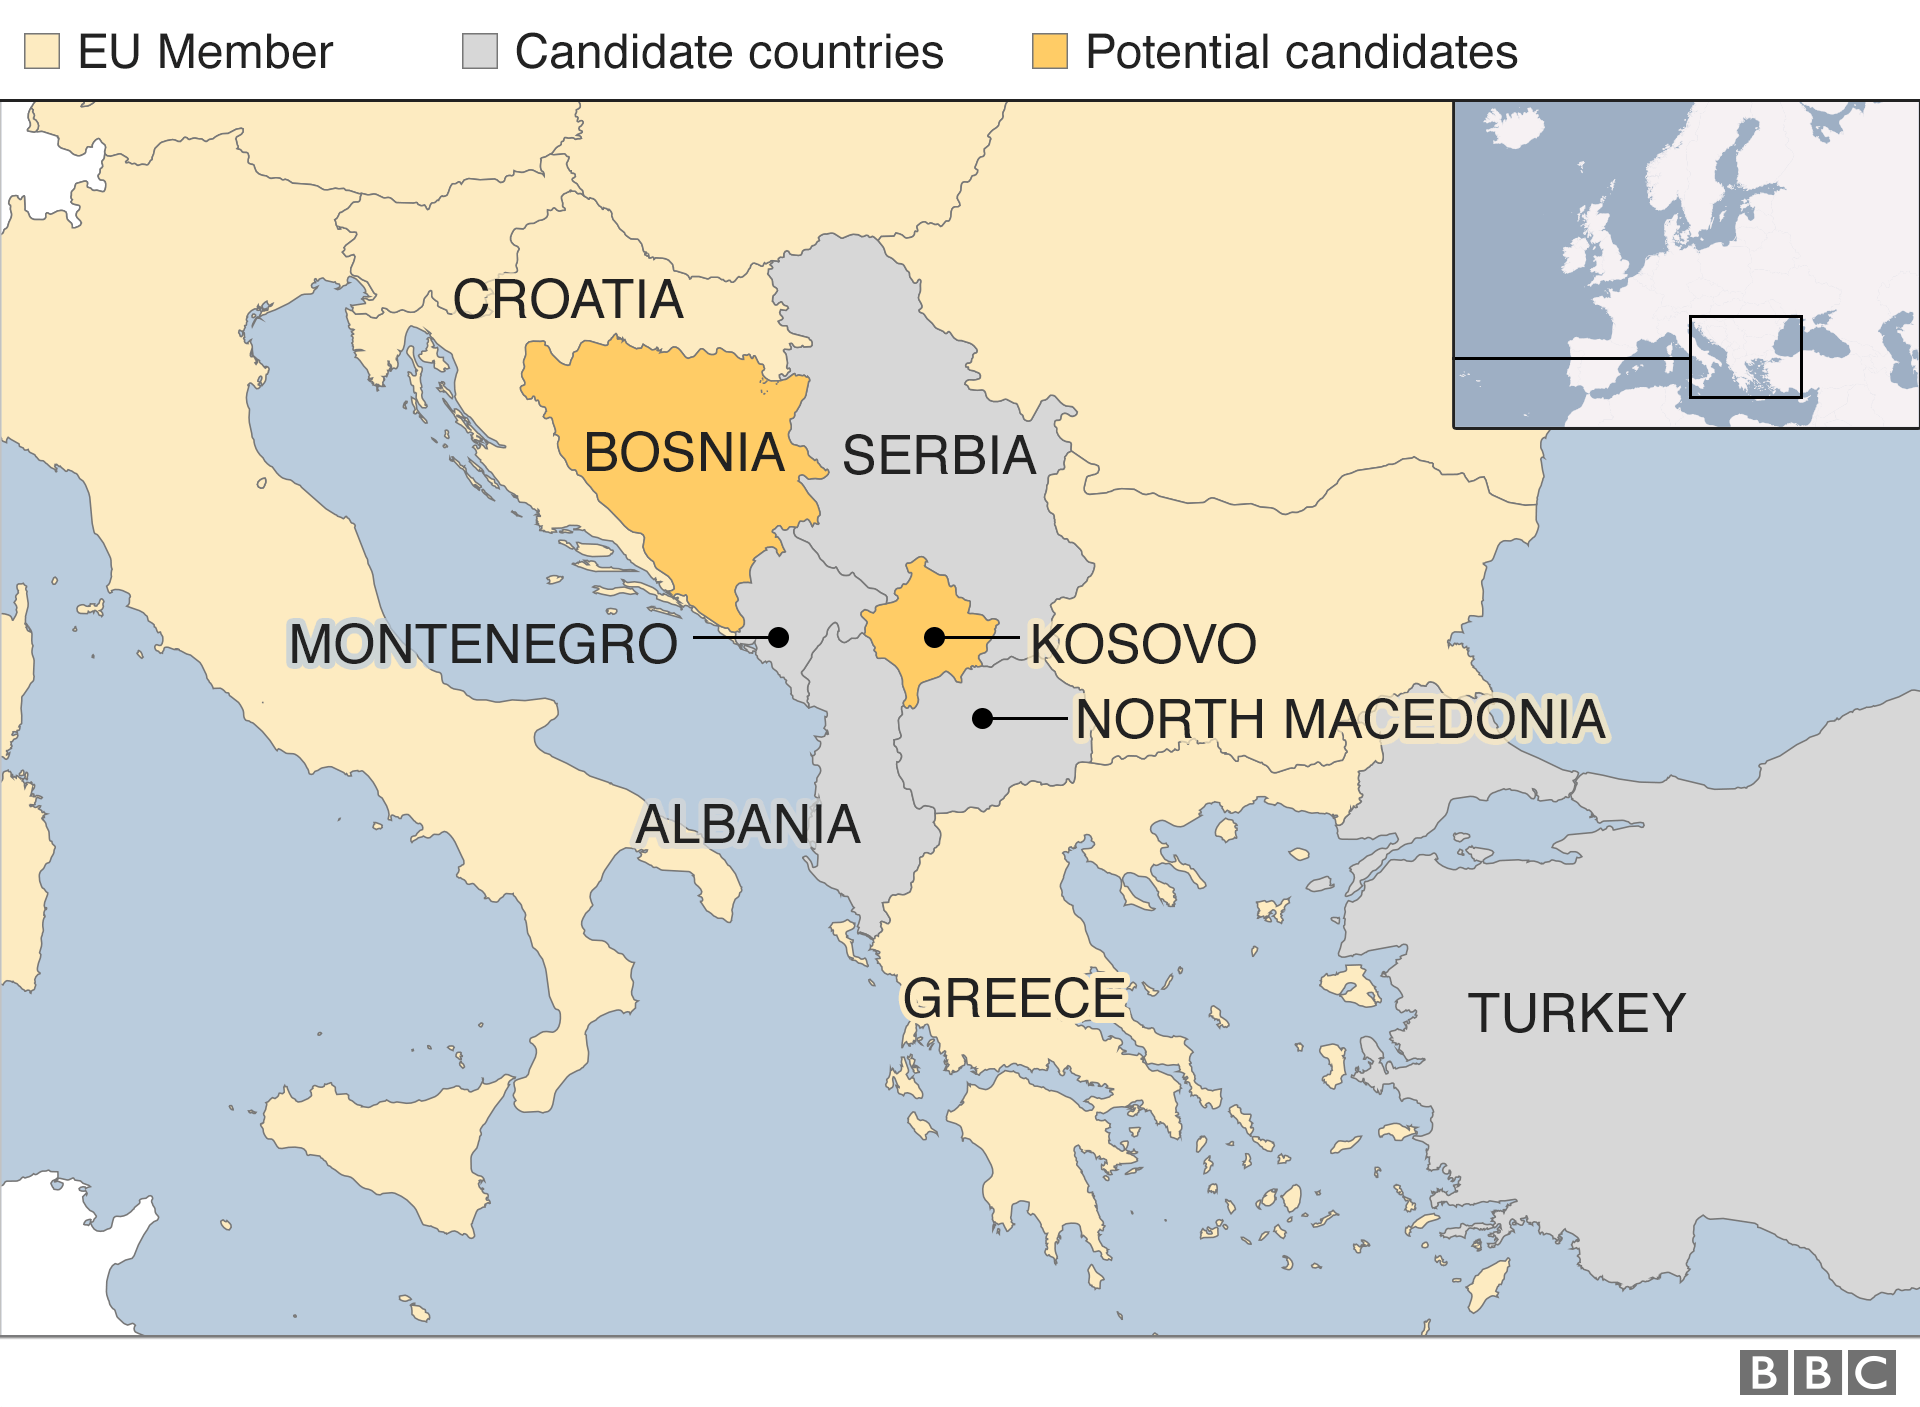 Балканы - страны-кандидаты в ЕС, карта